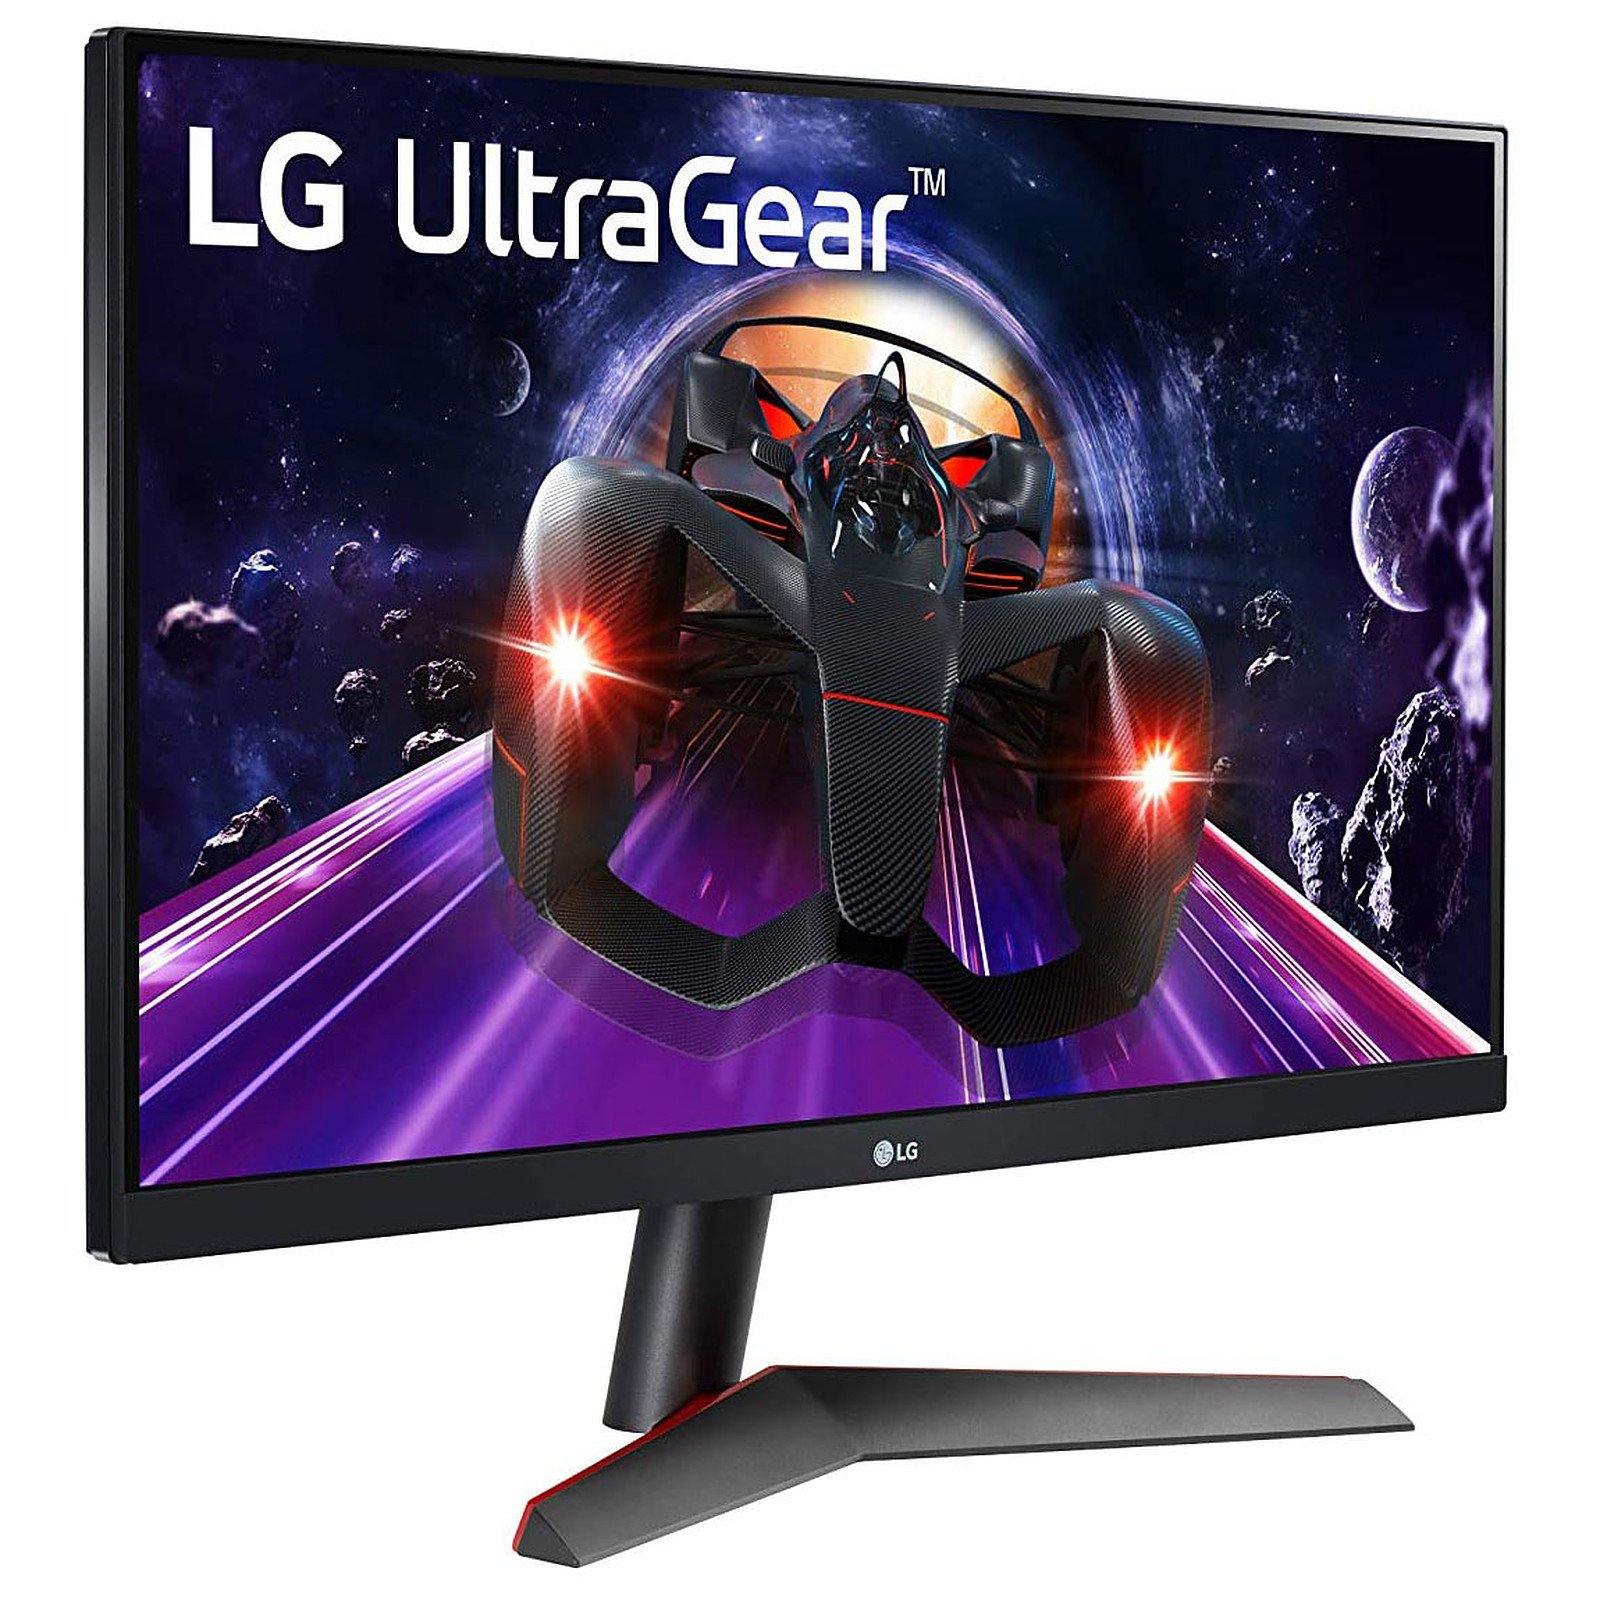 LG UltraGear 24GN600-B Maroc Prix Moniteur Gaming pas cher - smartmarket.ma